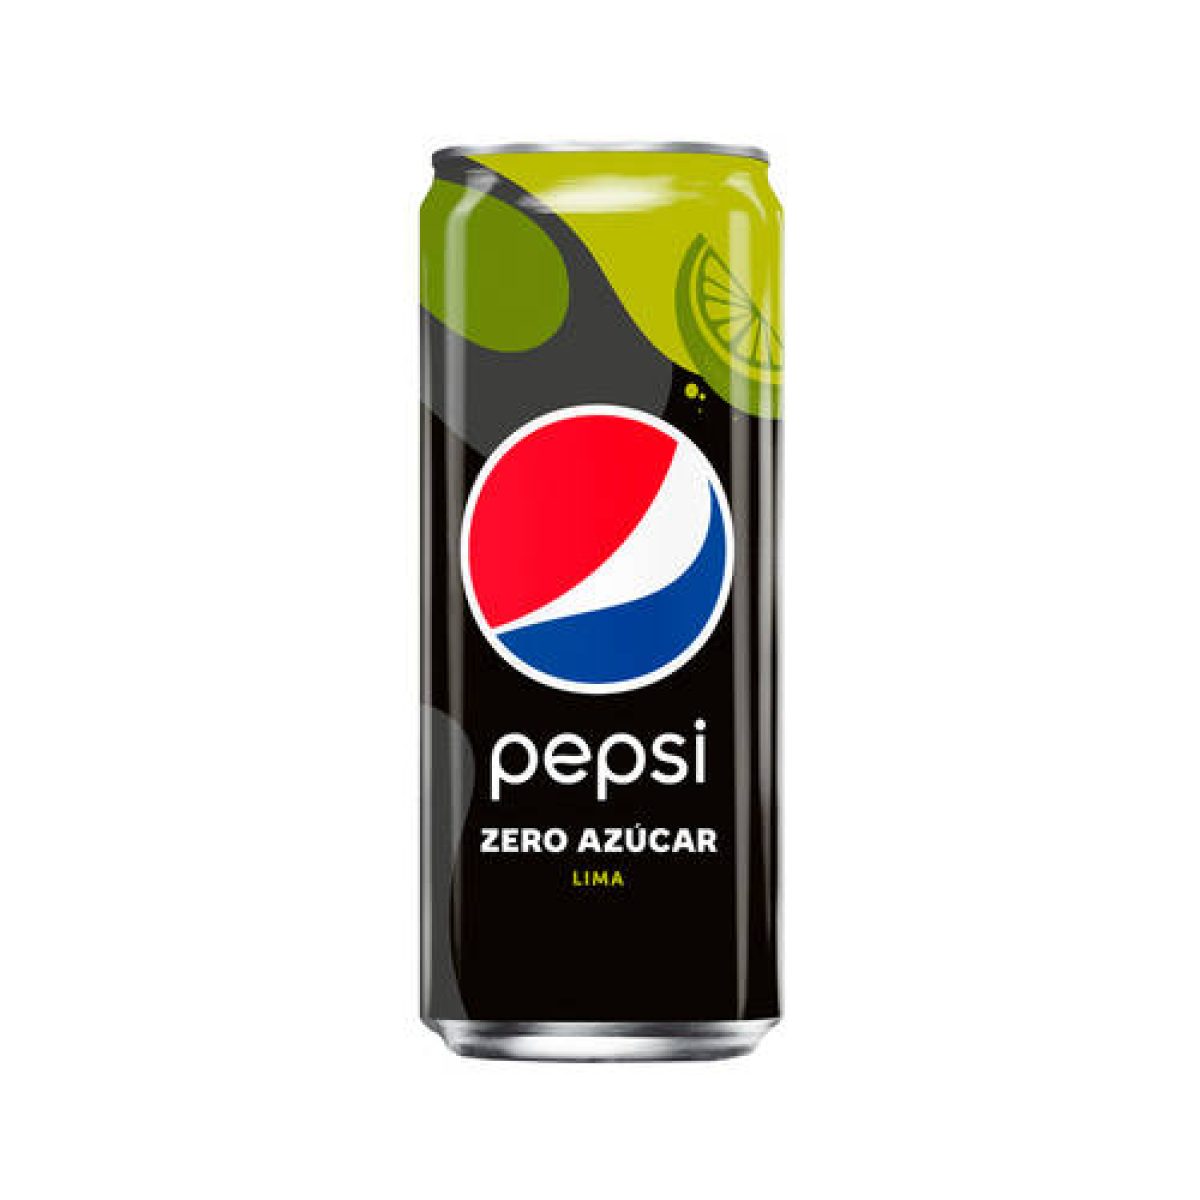 Pepsi Sabor Lima Max - 330ml